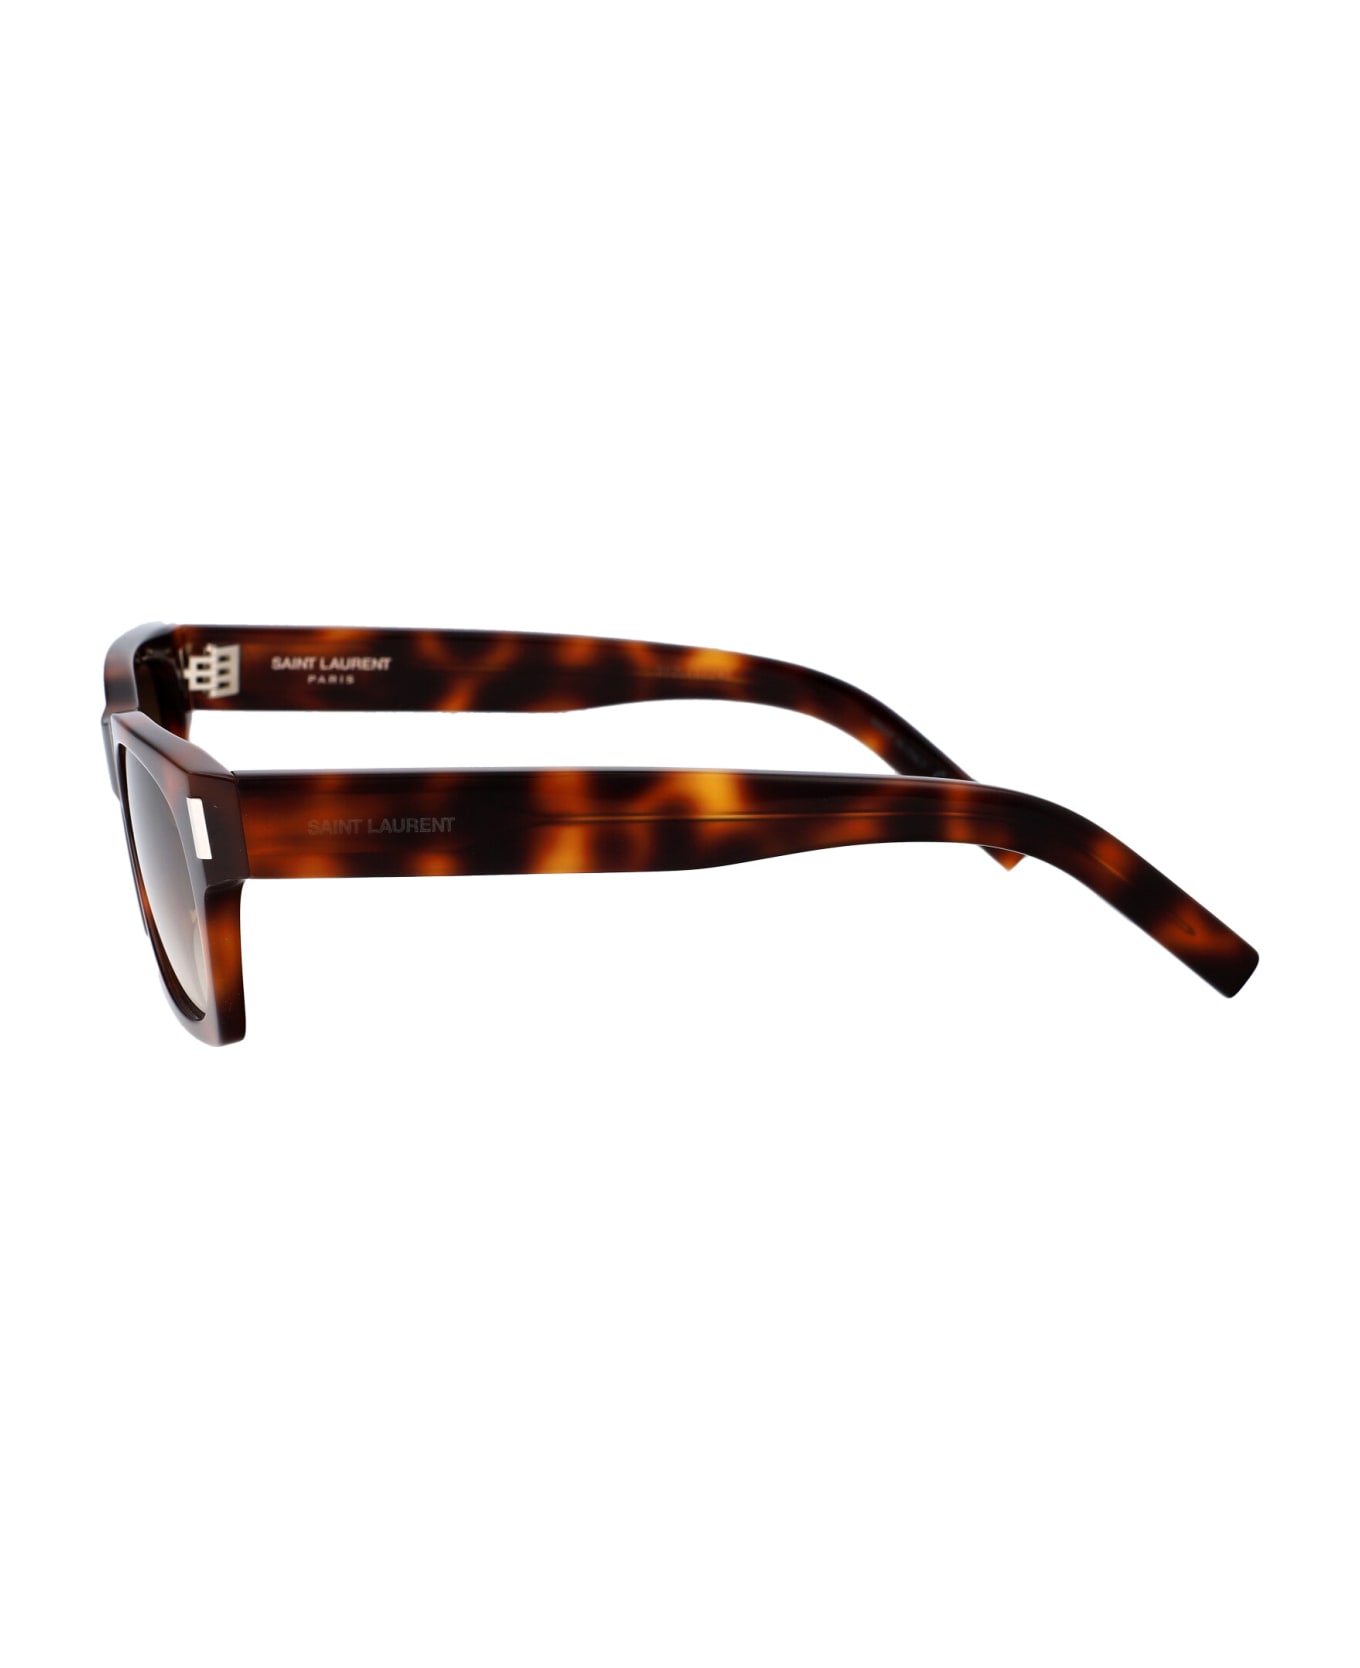 Saint Laurent Eyewear Sl 402 Sunglasses - 019 HAVANA HAVANA BROWN